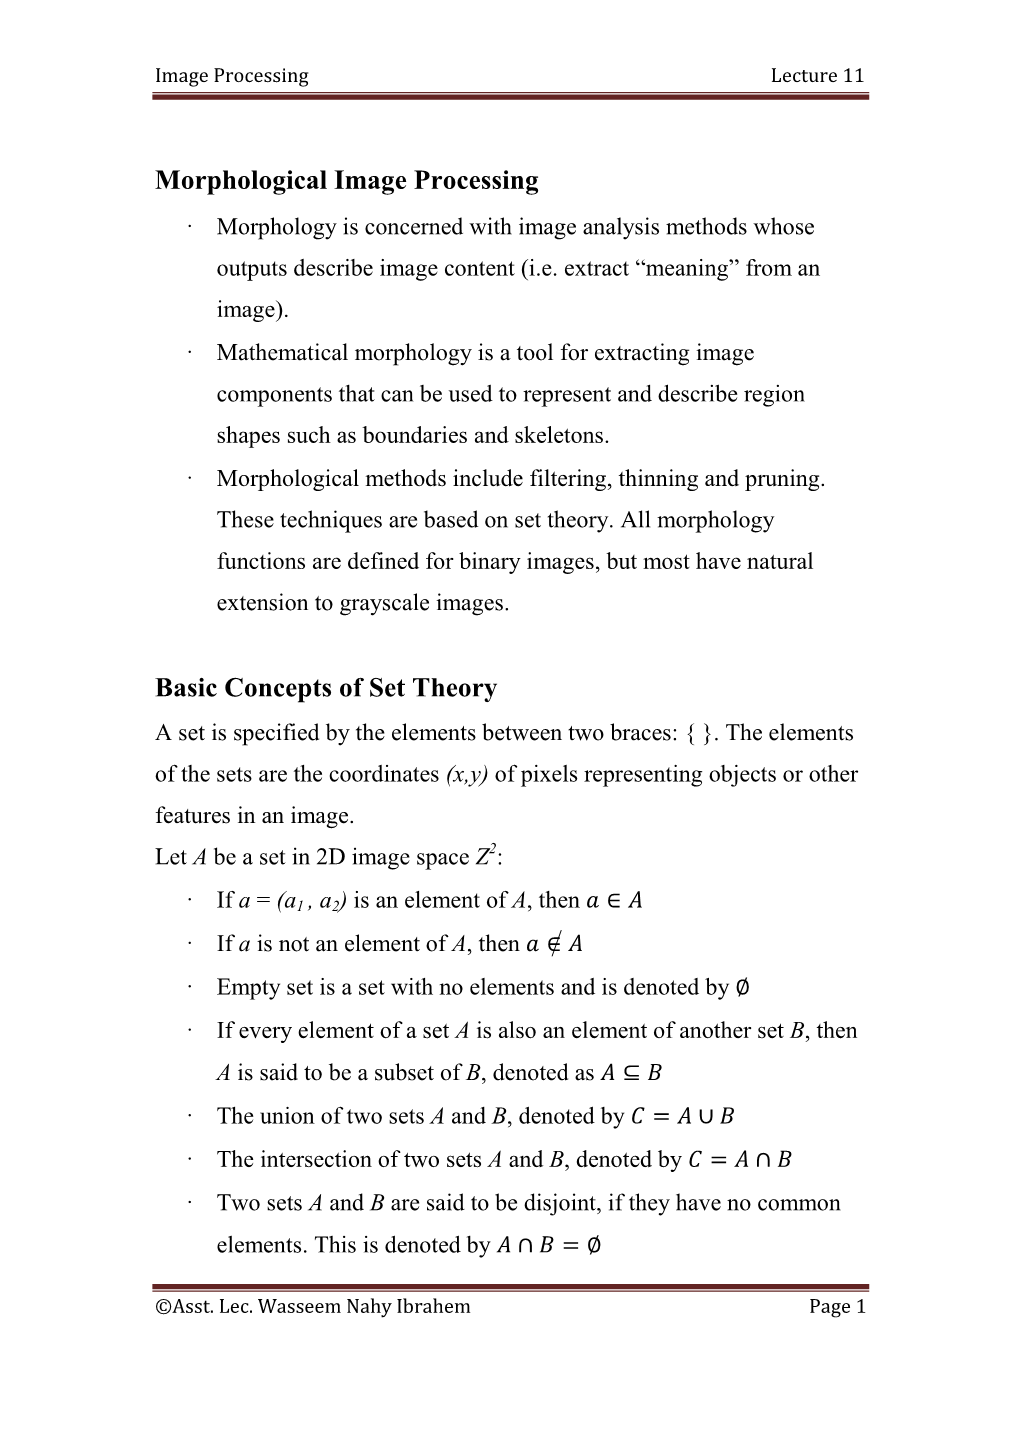 Morphological Image Processing Basic Concepts of Set Theory